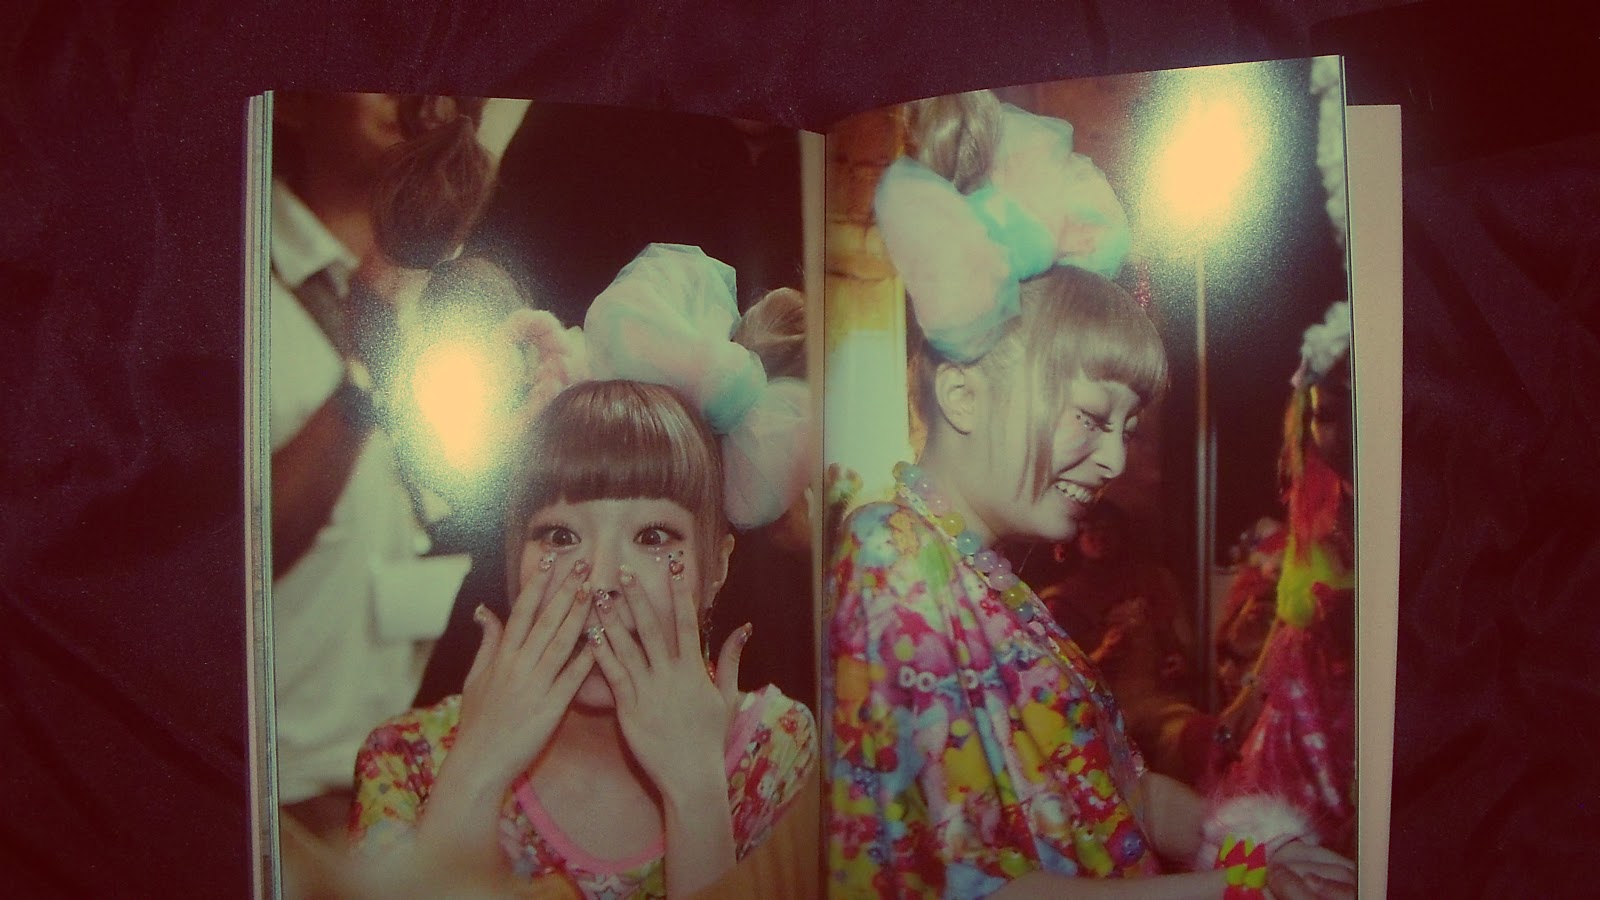 SNSD Casio Baby G Wallpaper + Photos | Beautiful Song Lyrics